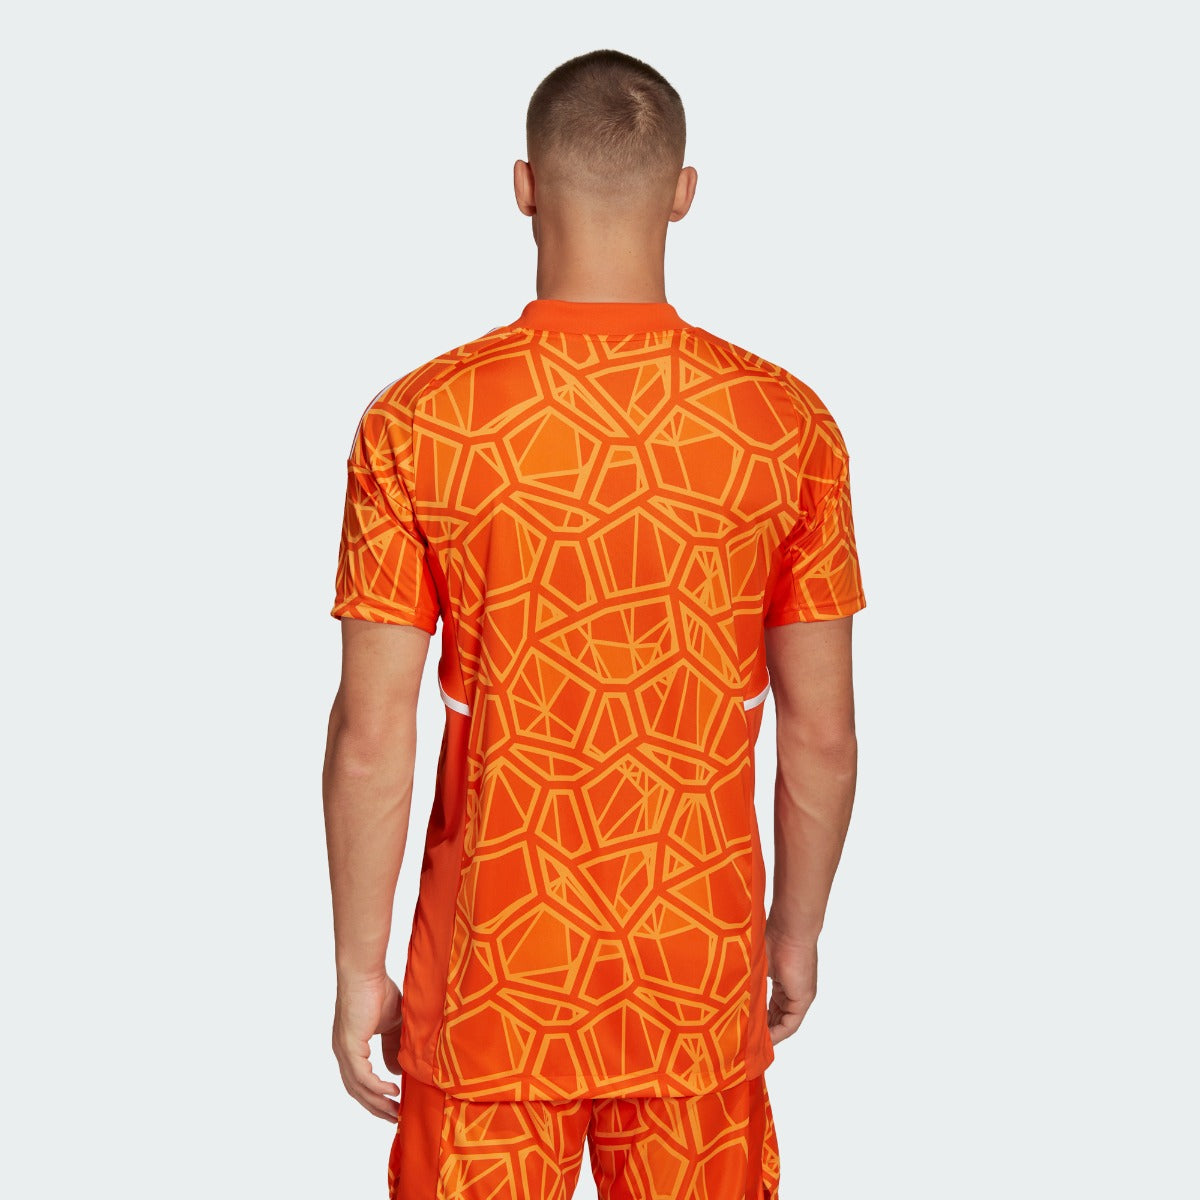 Adidas Alternate Orange Jersey 46 / Personal